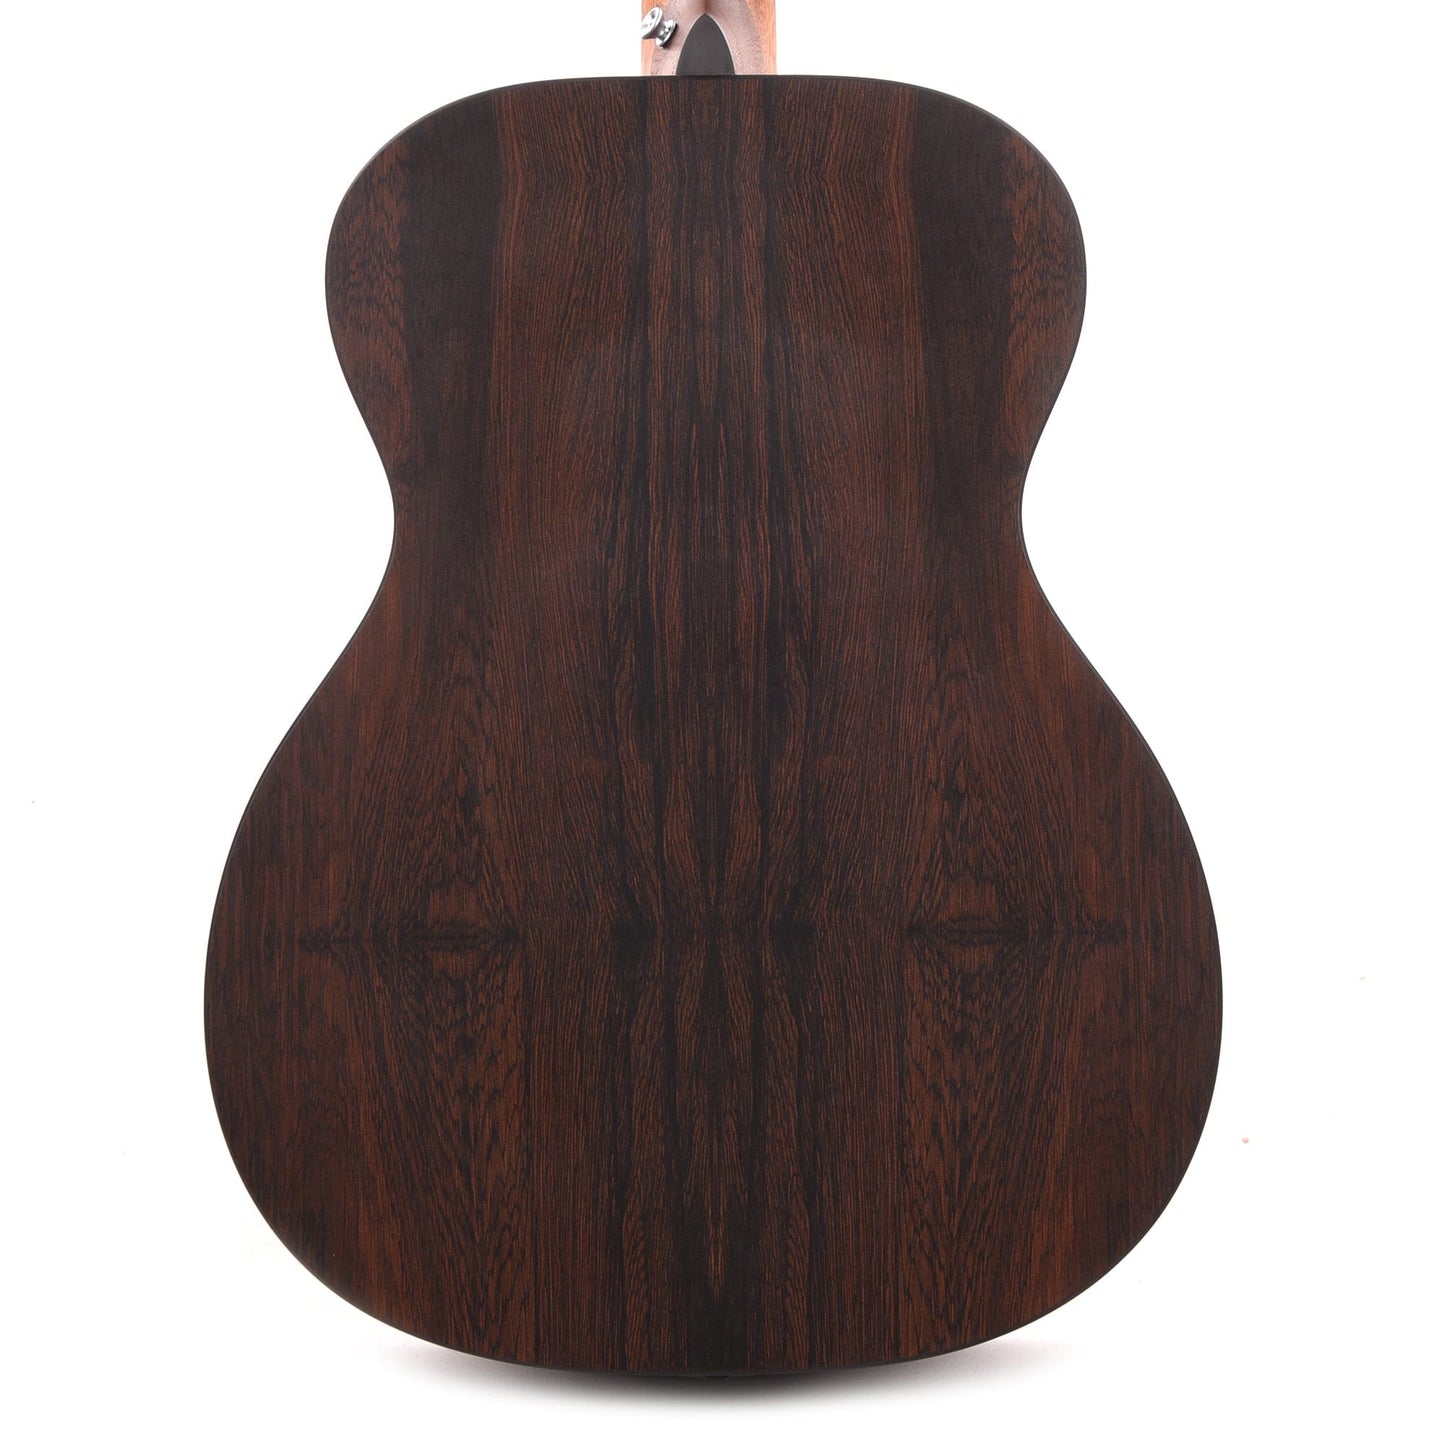 Martin 000-X2E Spruce/Brazilian Rosewood Pattern HPL Natural Acoustic Guitars / OM and Auditorium